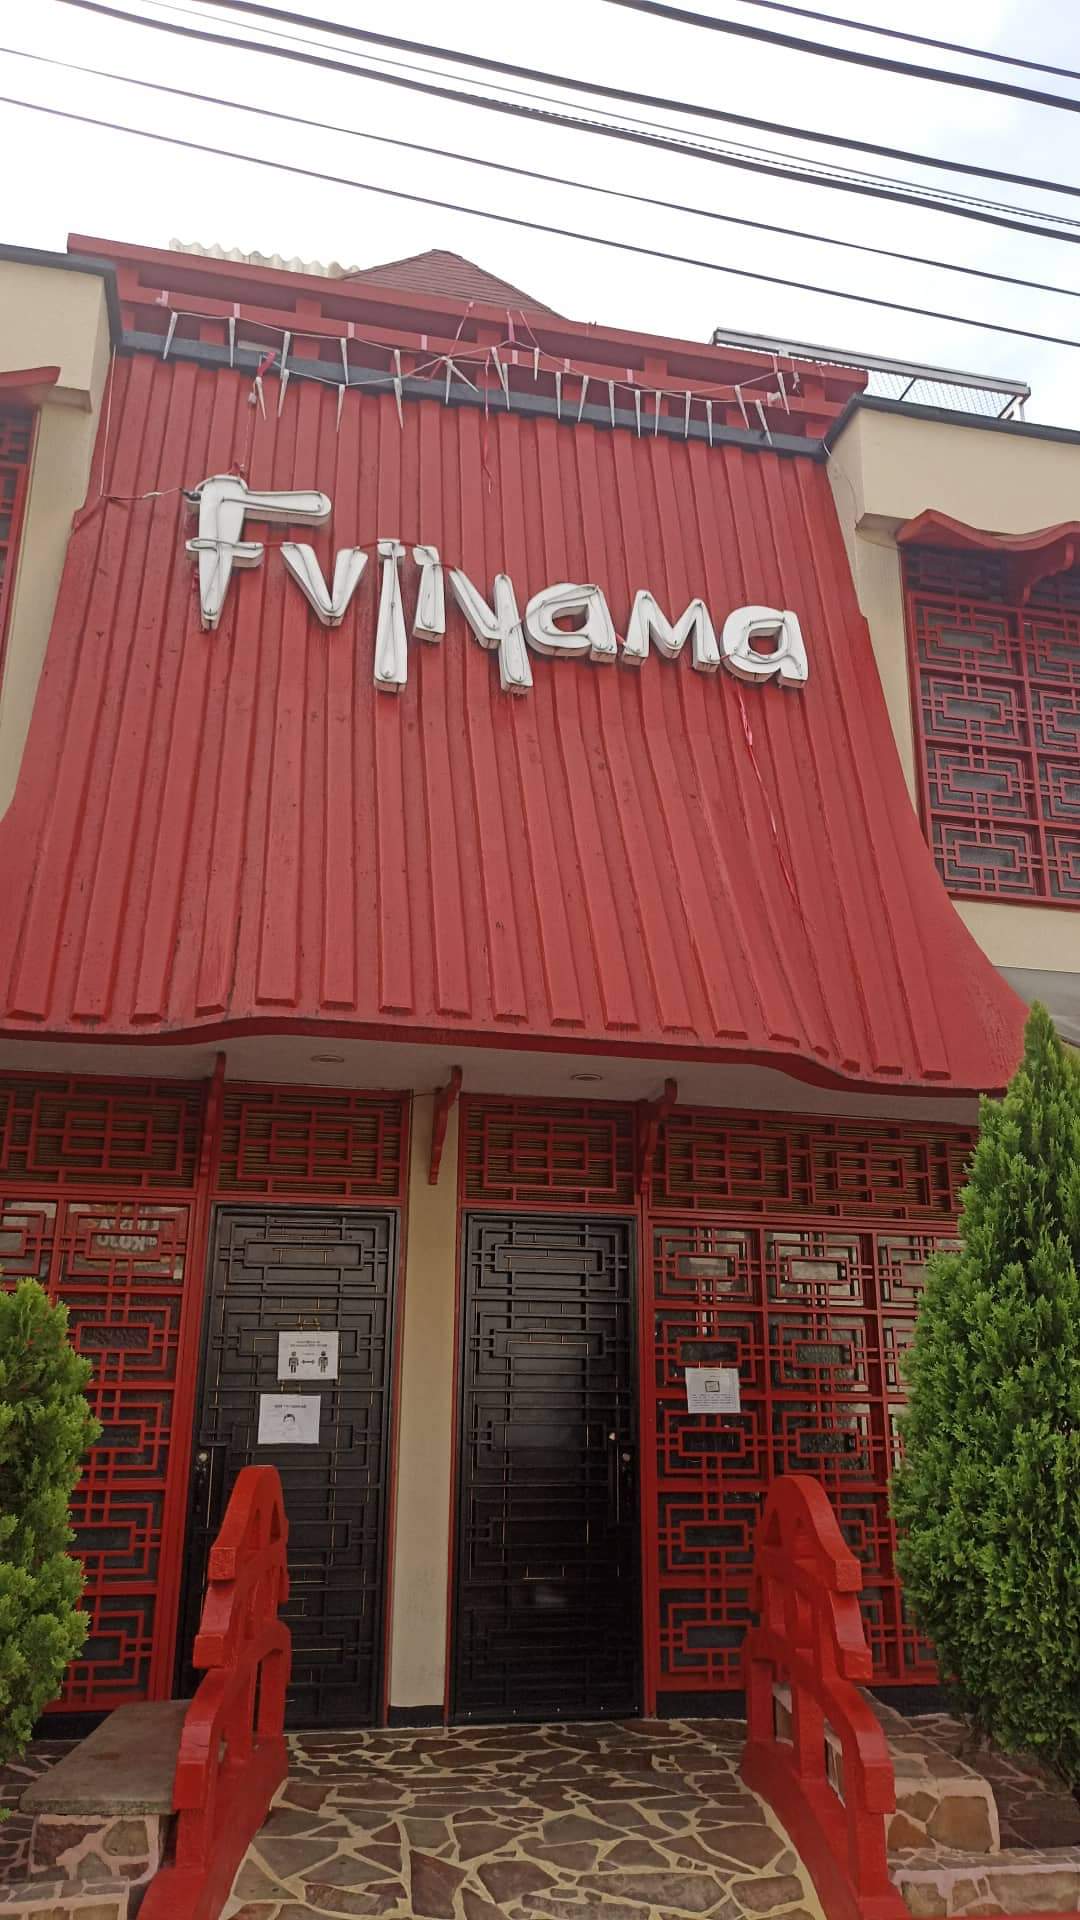 Fujiyama Restaurante